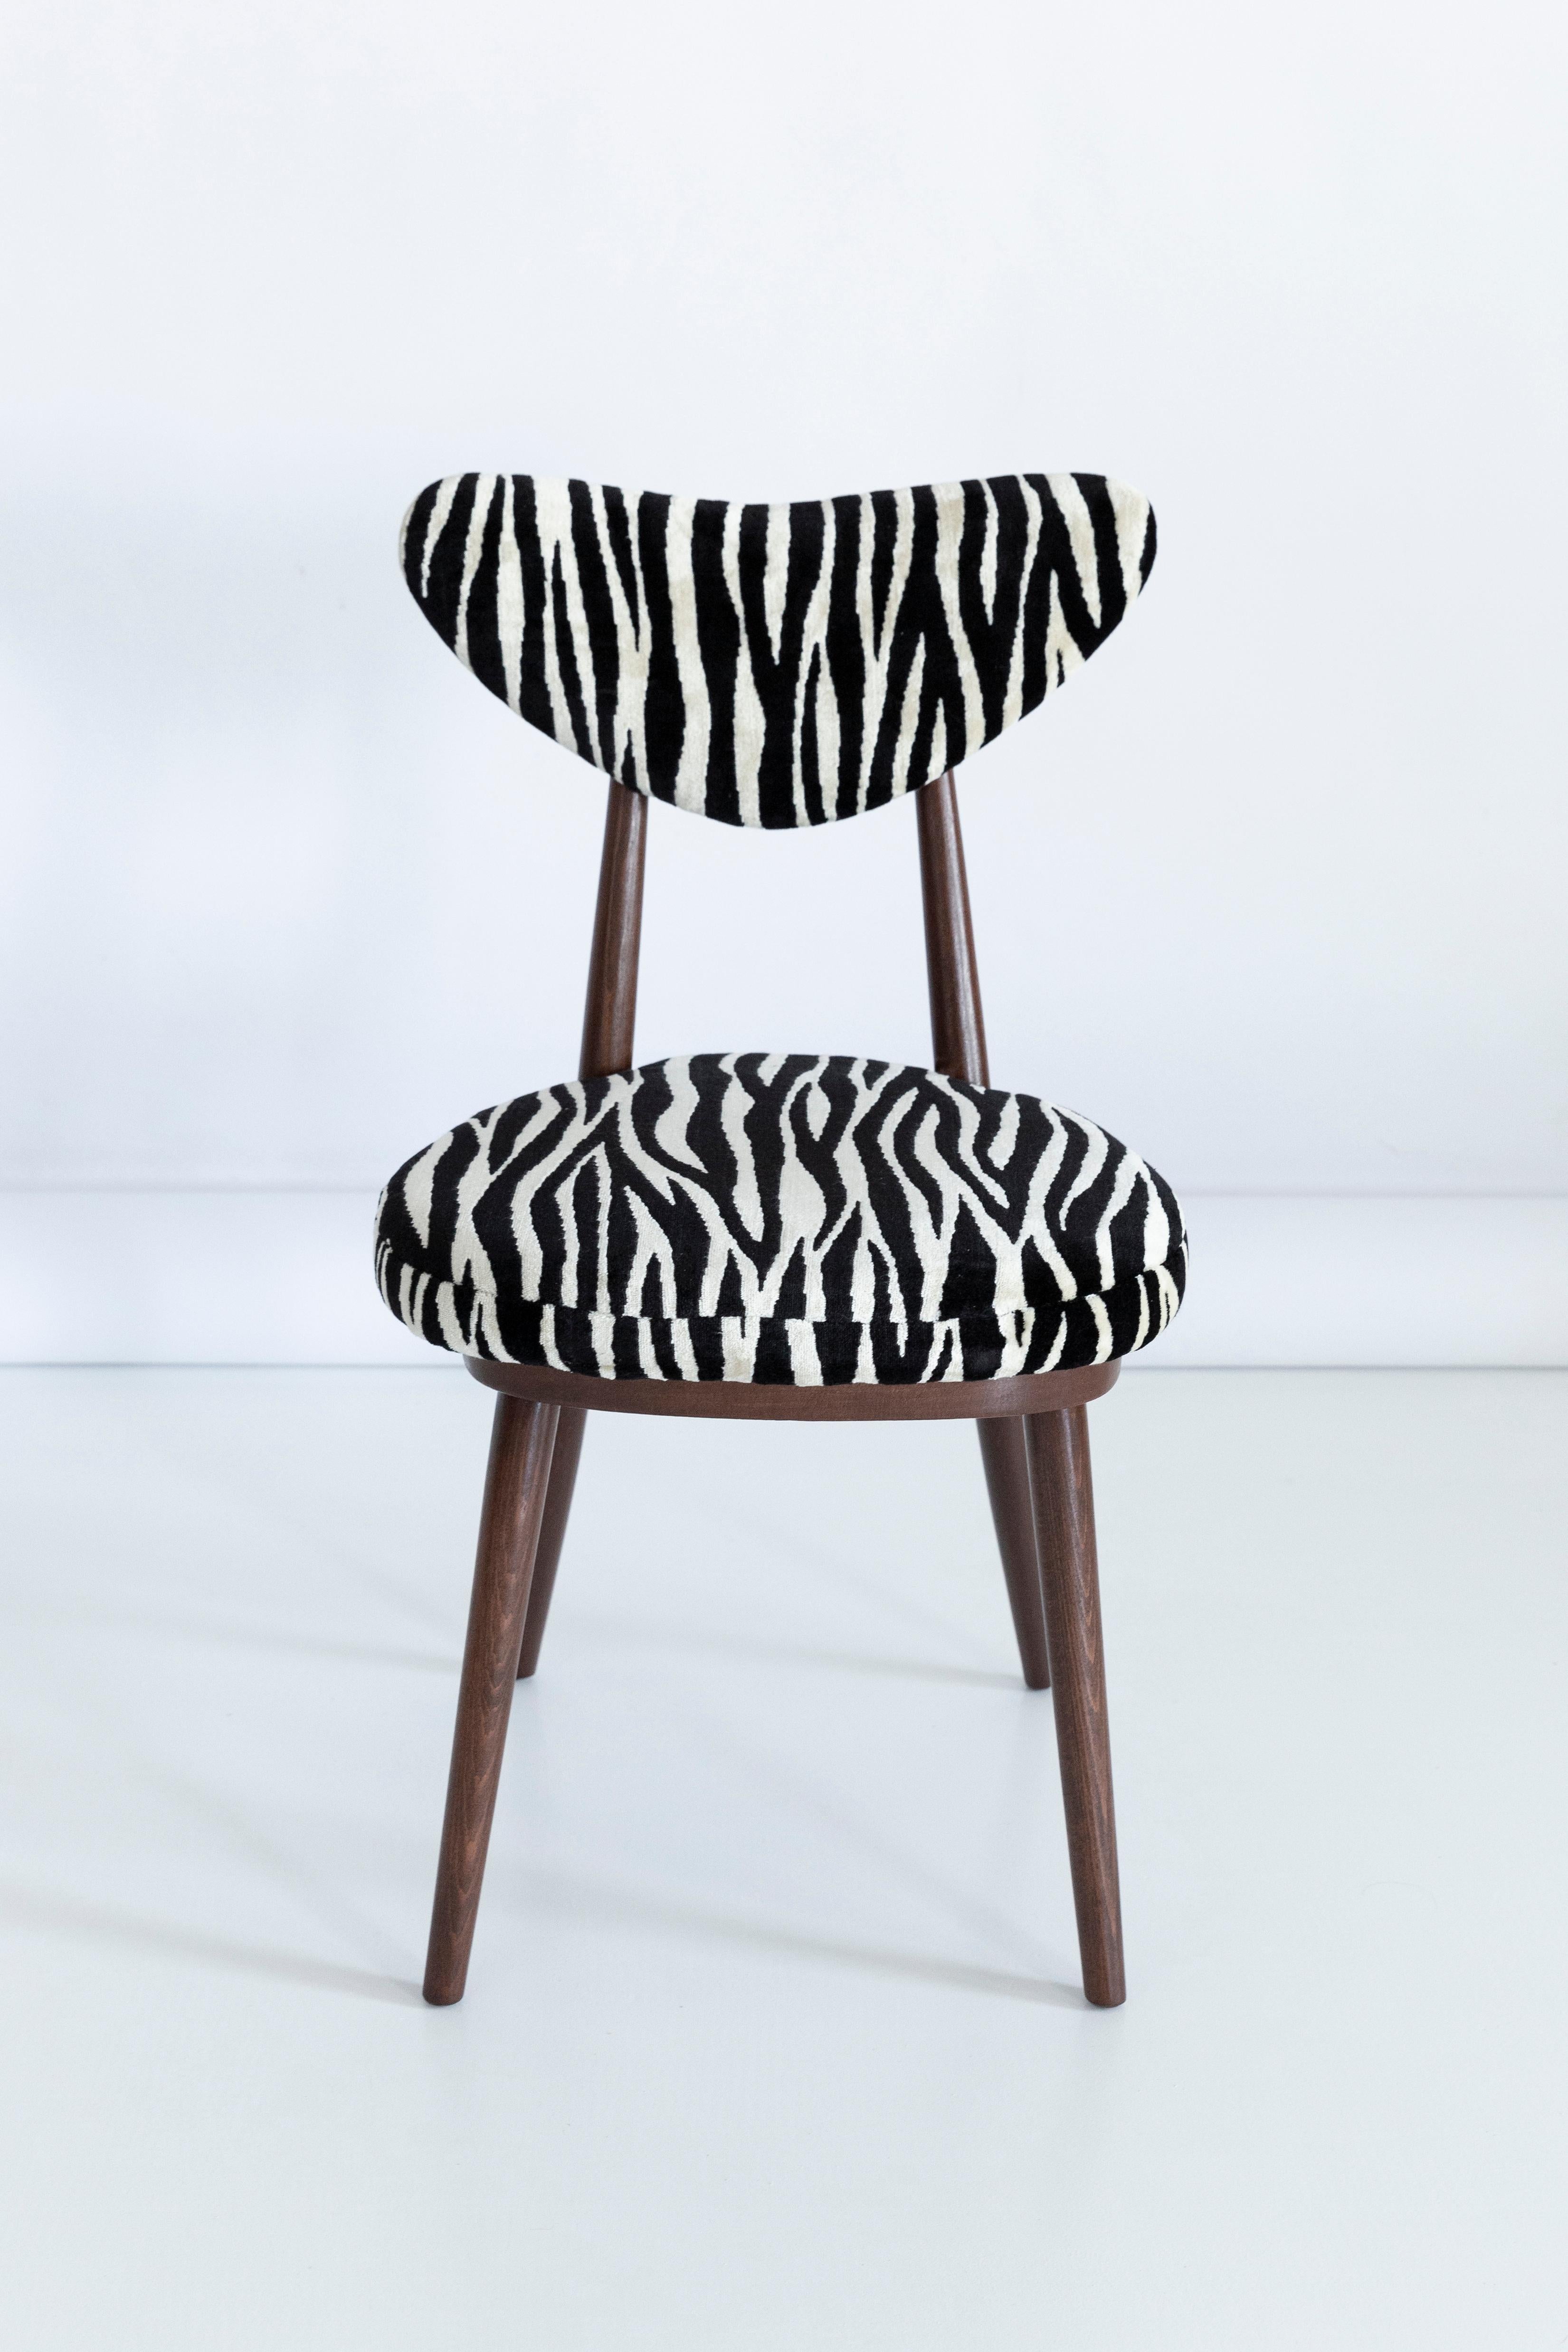 Six Midcentury Zebra Black White Heart Chairs, Hollywood Regency, Poland, 1960s For Sale 10